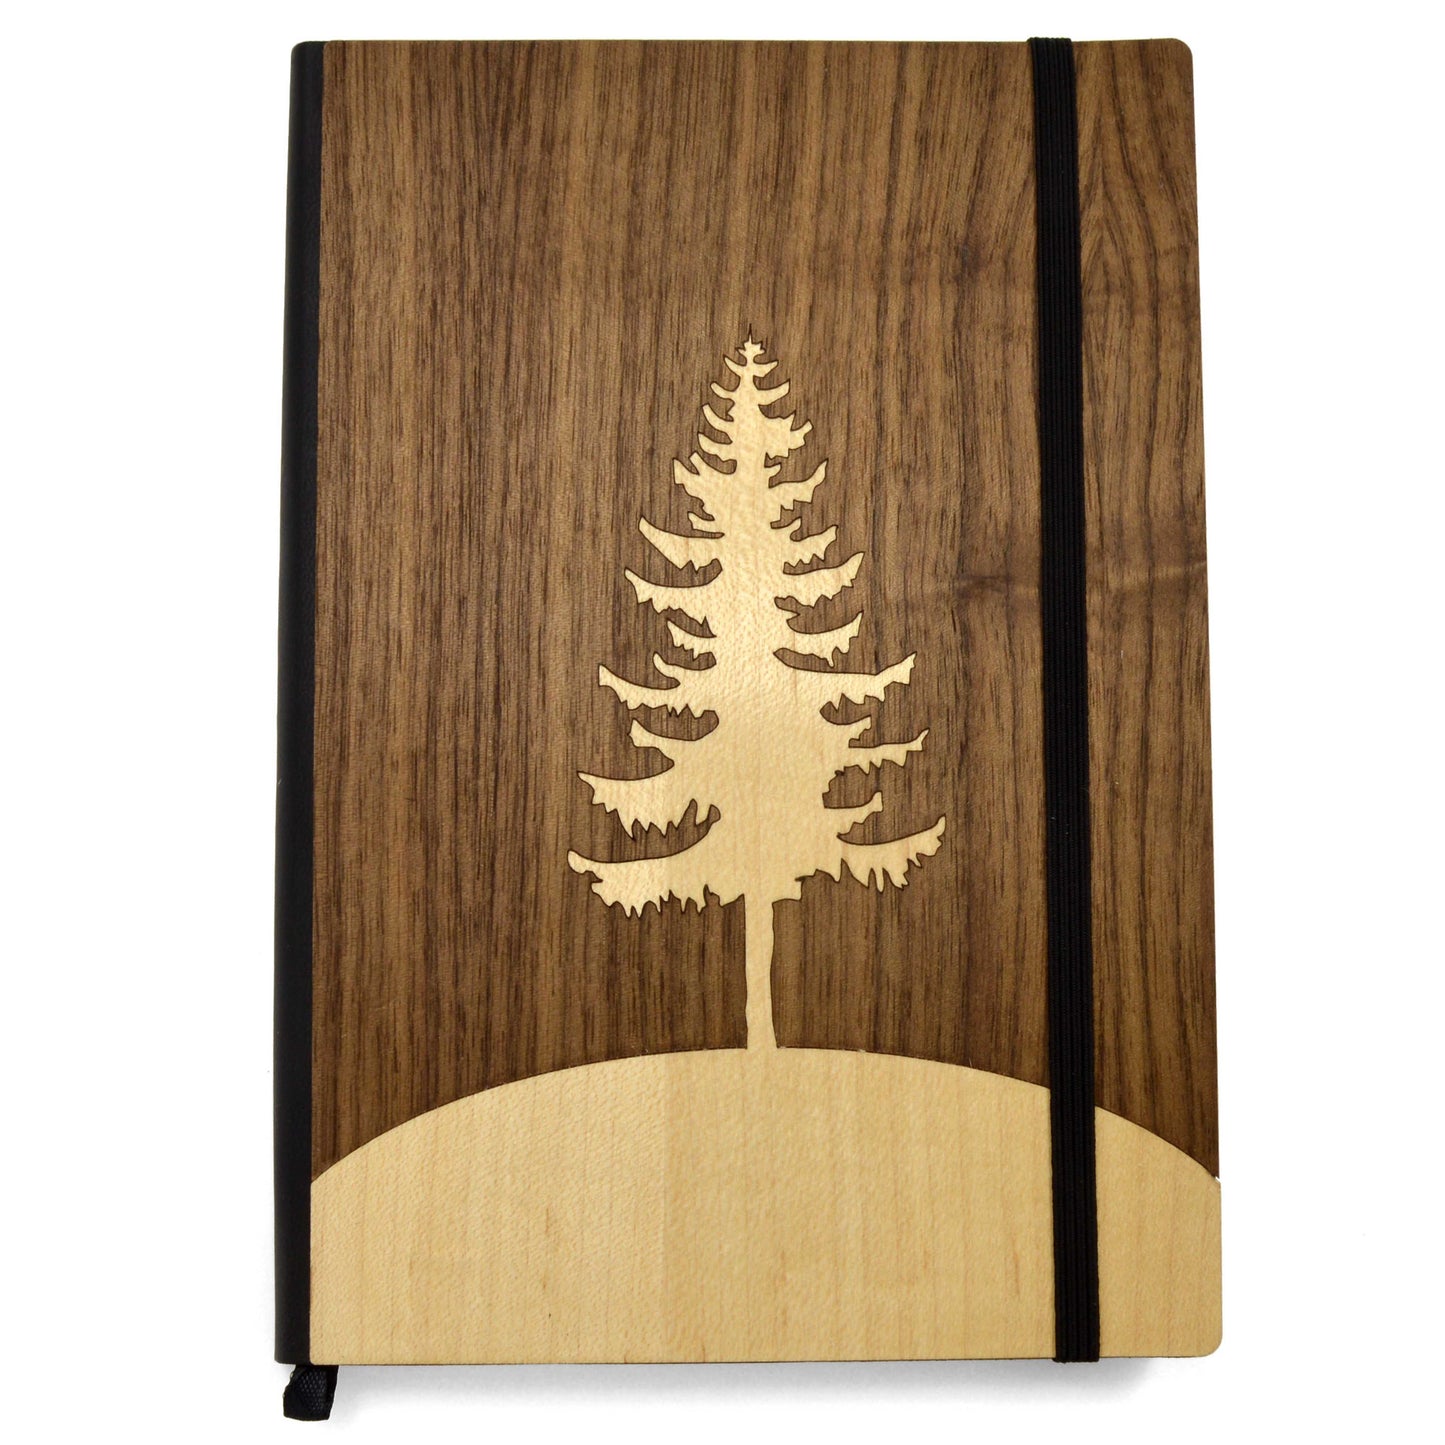 Wooden Journal - Autumn Woods Co.